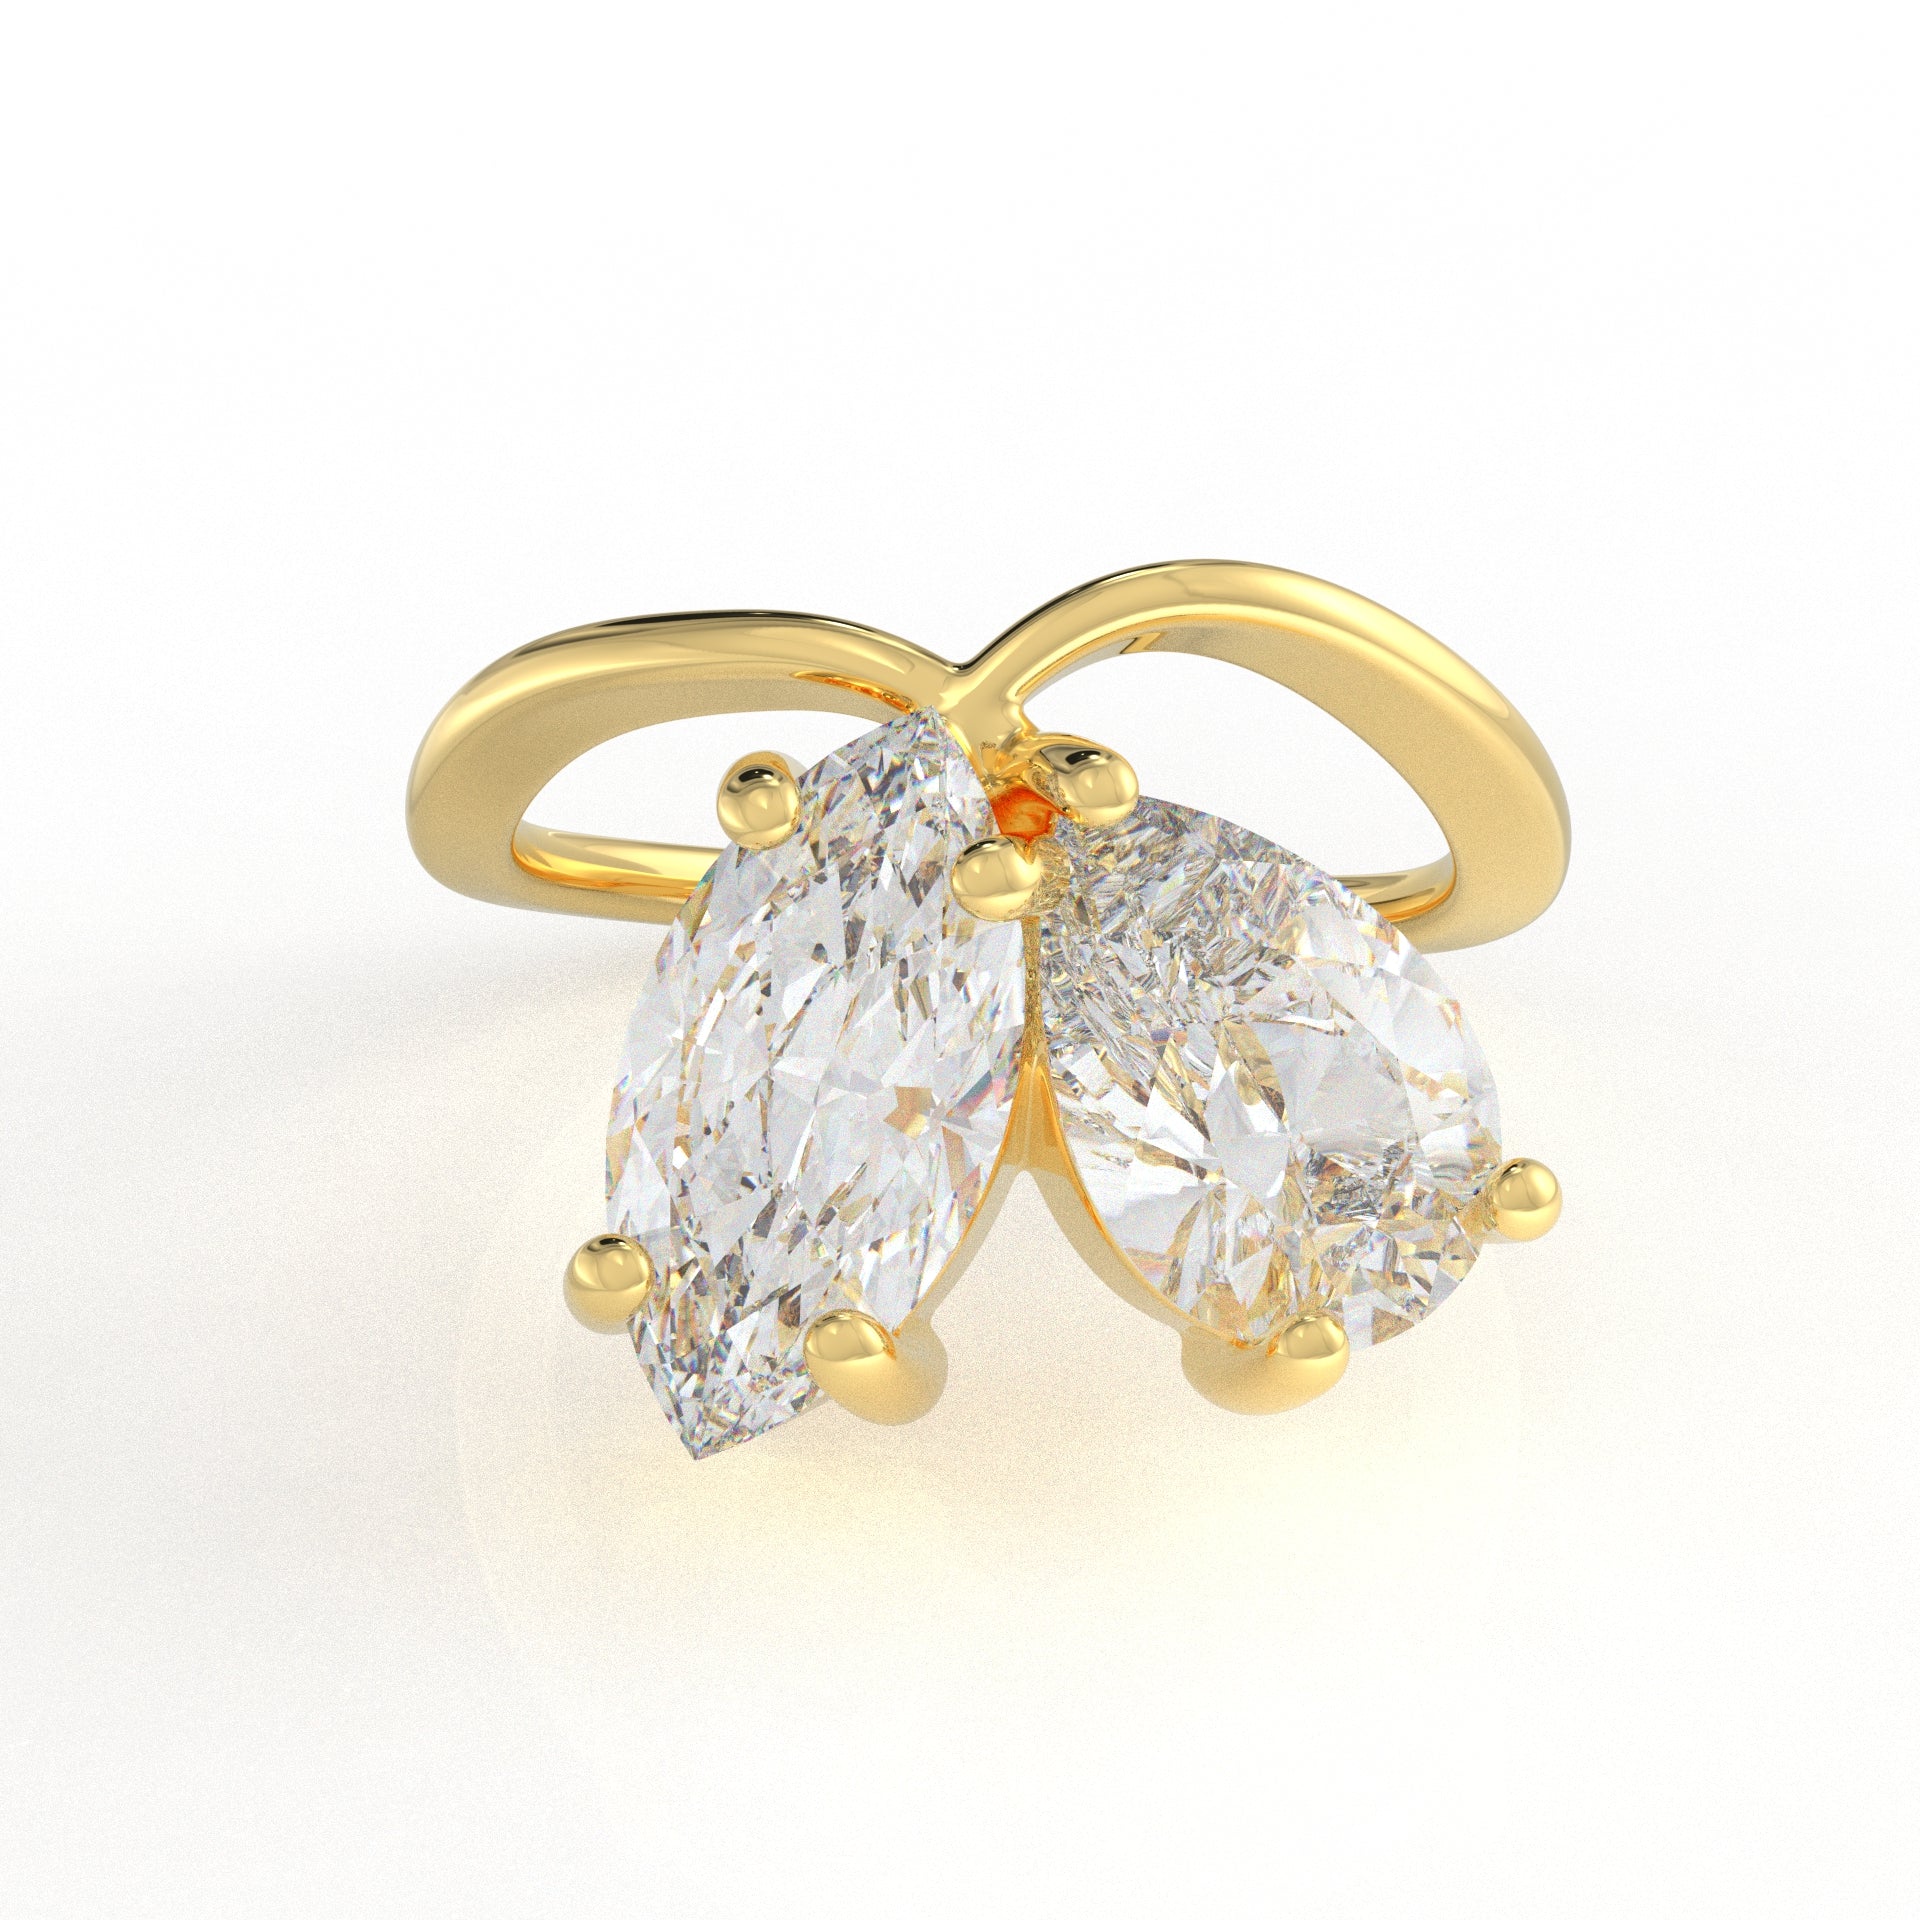 Monroe Ring - 2.29Ct Moissanite diamond